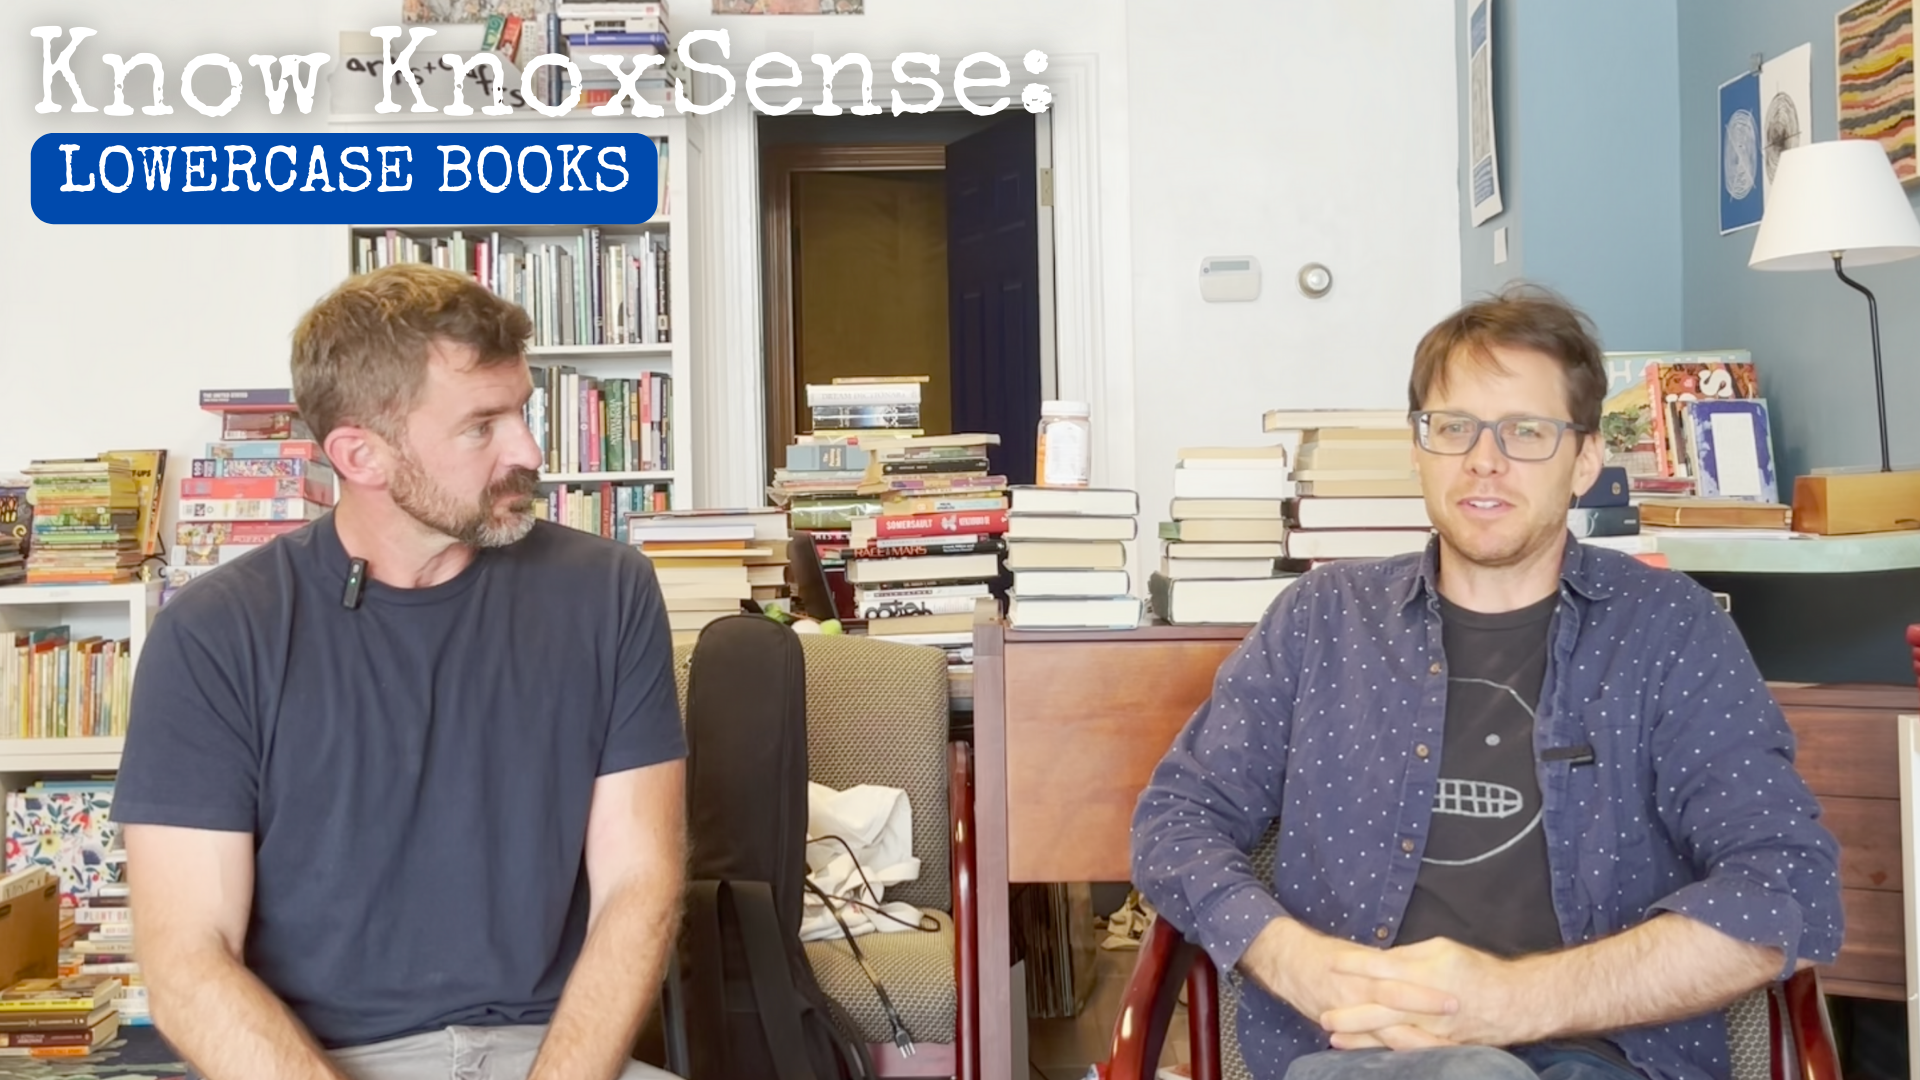 Know Knoxsense: Lowercase Books